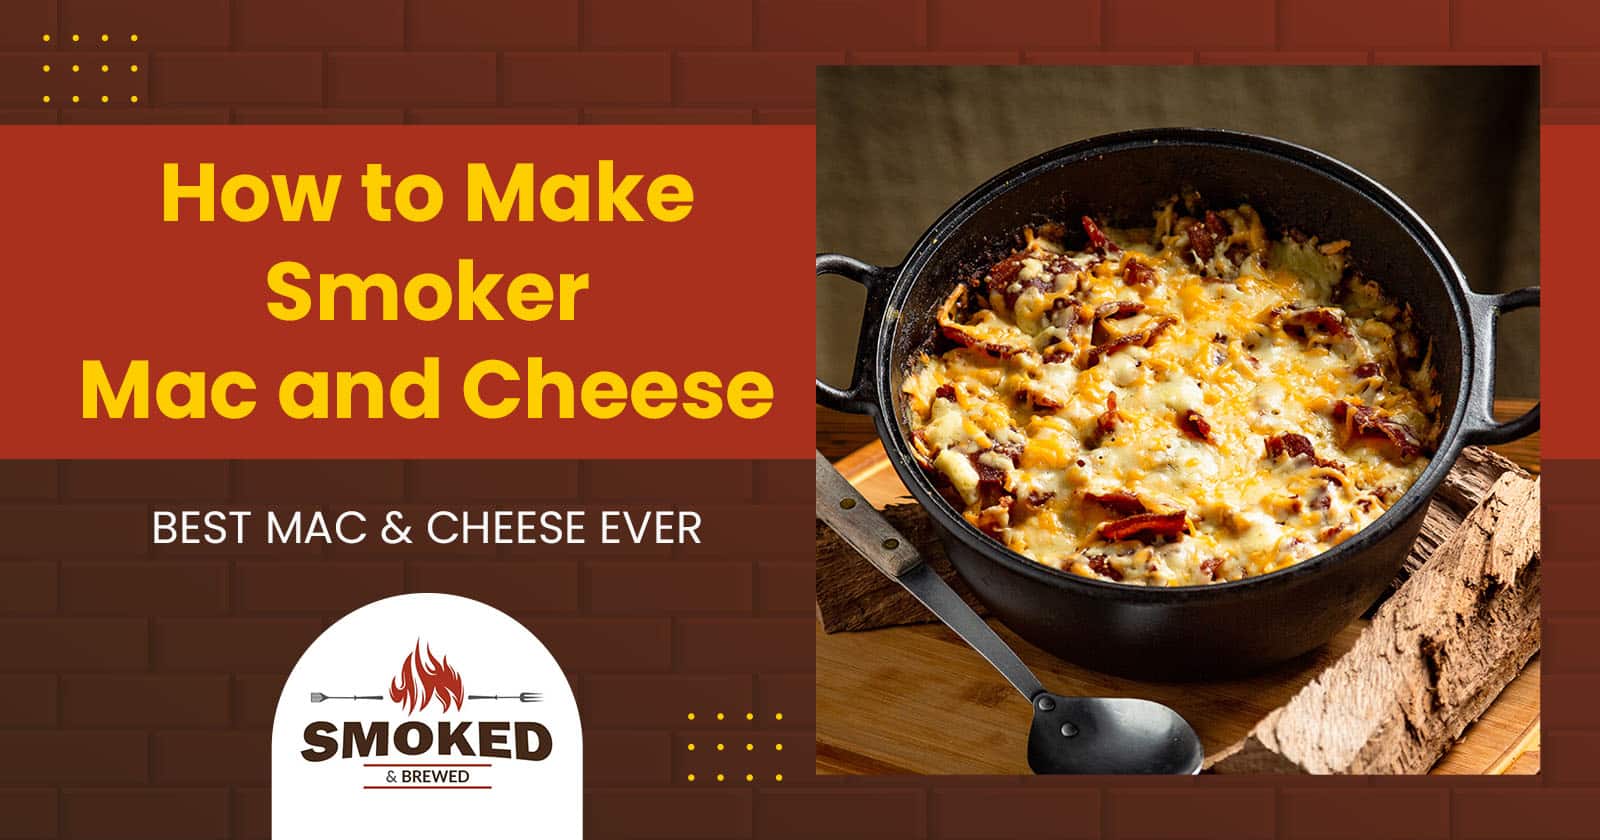 How to Make Smoker Mac and Cheese [BEST MAC & CHEESE EVER]